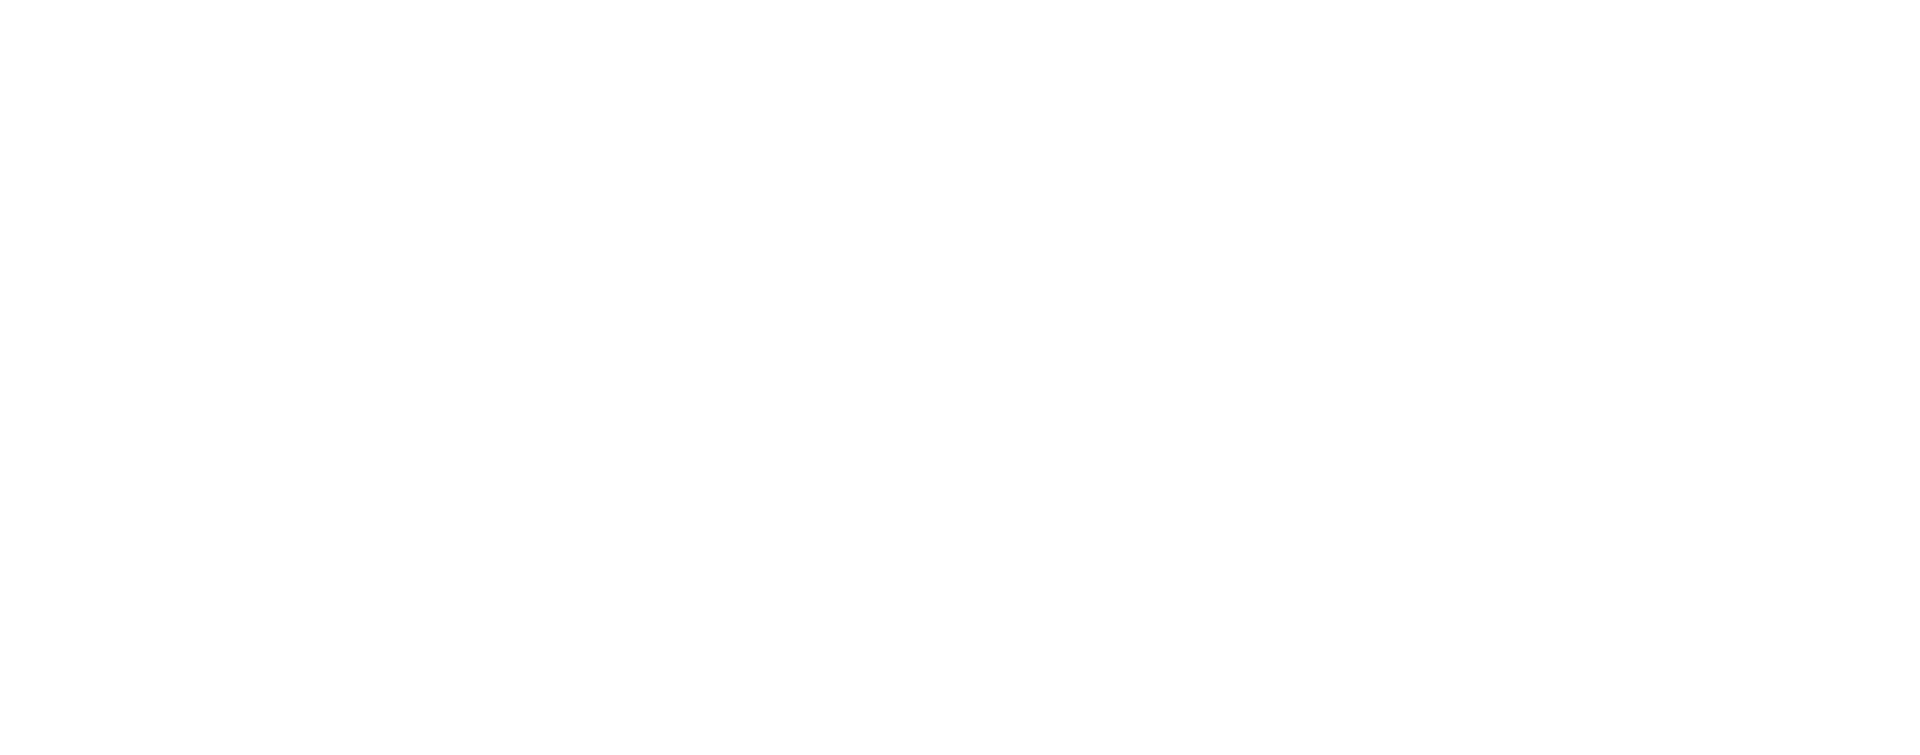 Hera Consulting Group : Cabinet de Conseil au Maroc